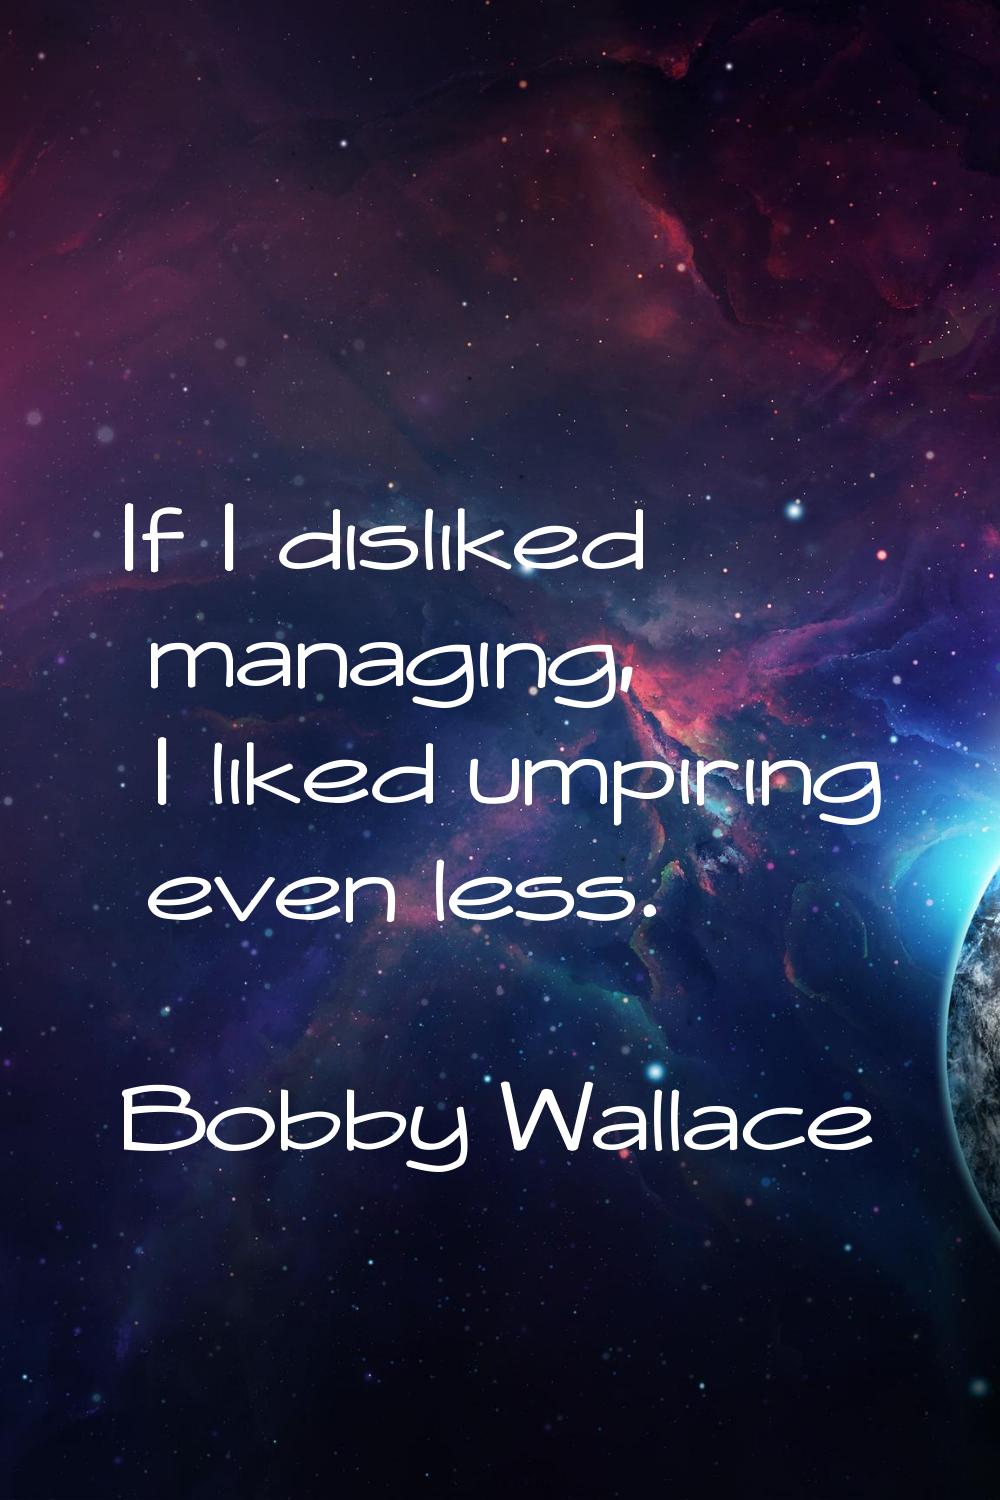 If I disliked managing, I liked umpiring even less.